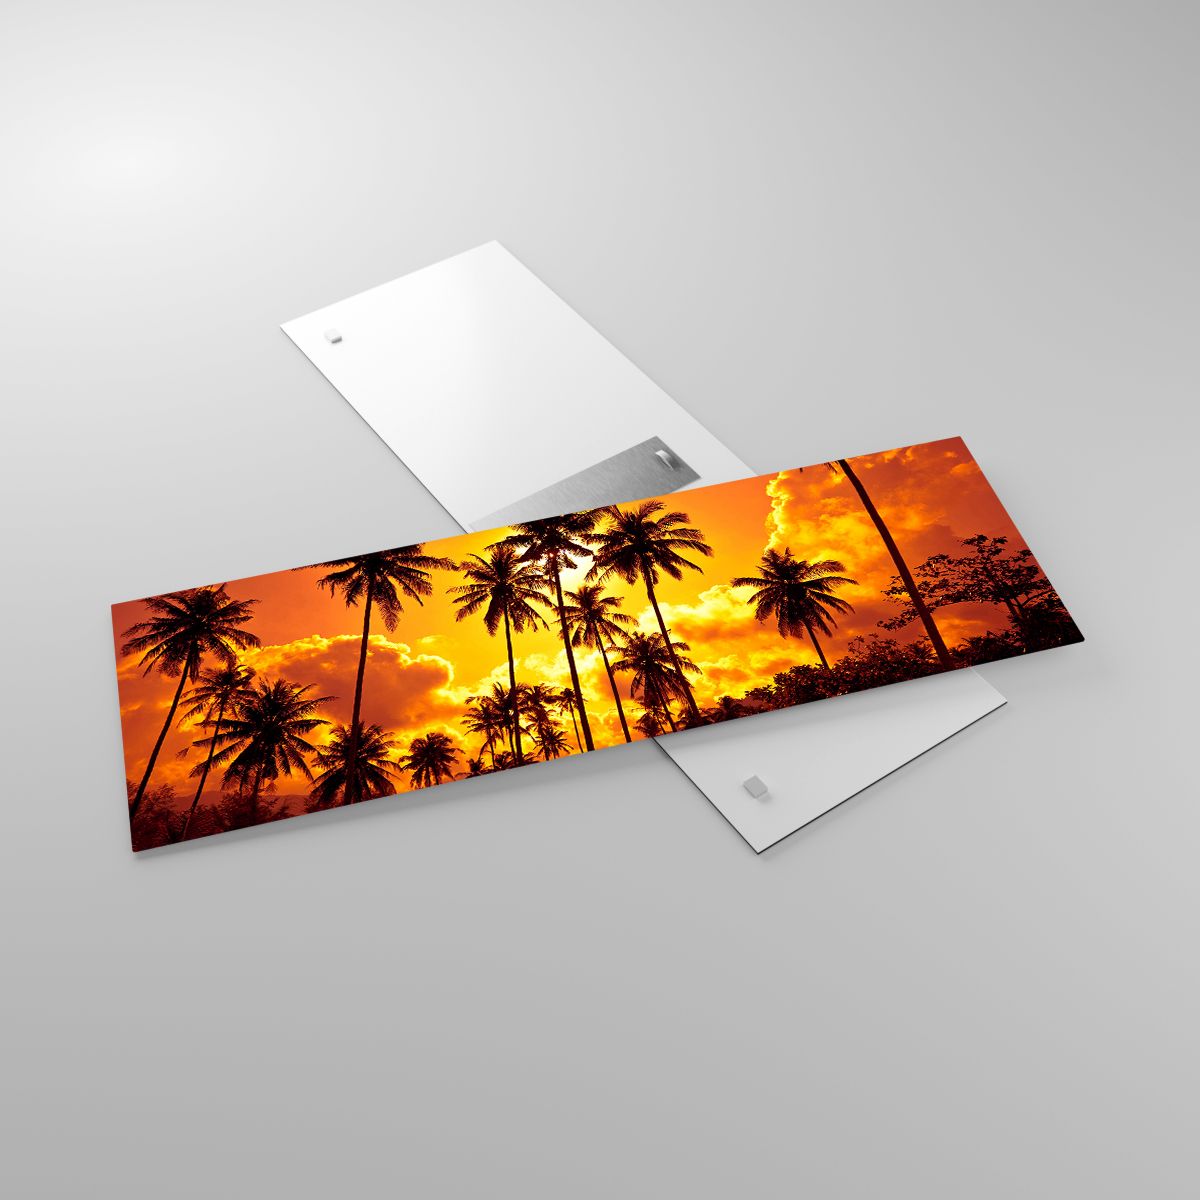 Glasbild Palmen, Glasbild Tropen, Glasbild Sonne, Glasbild Landschaft, Glasbild Strand